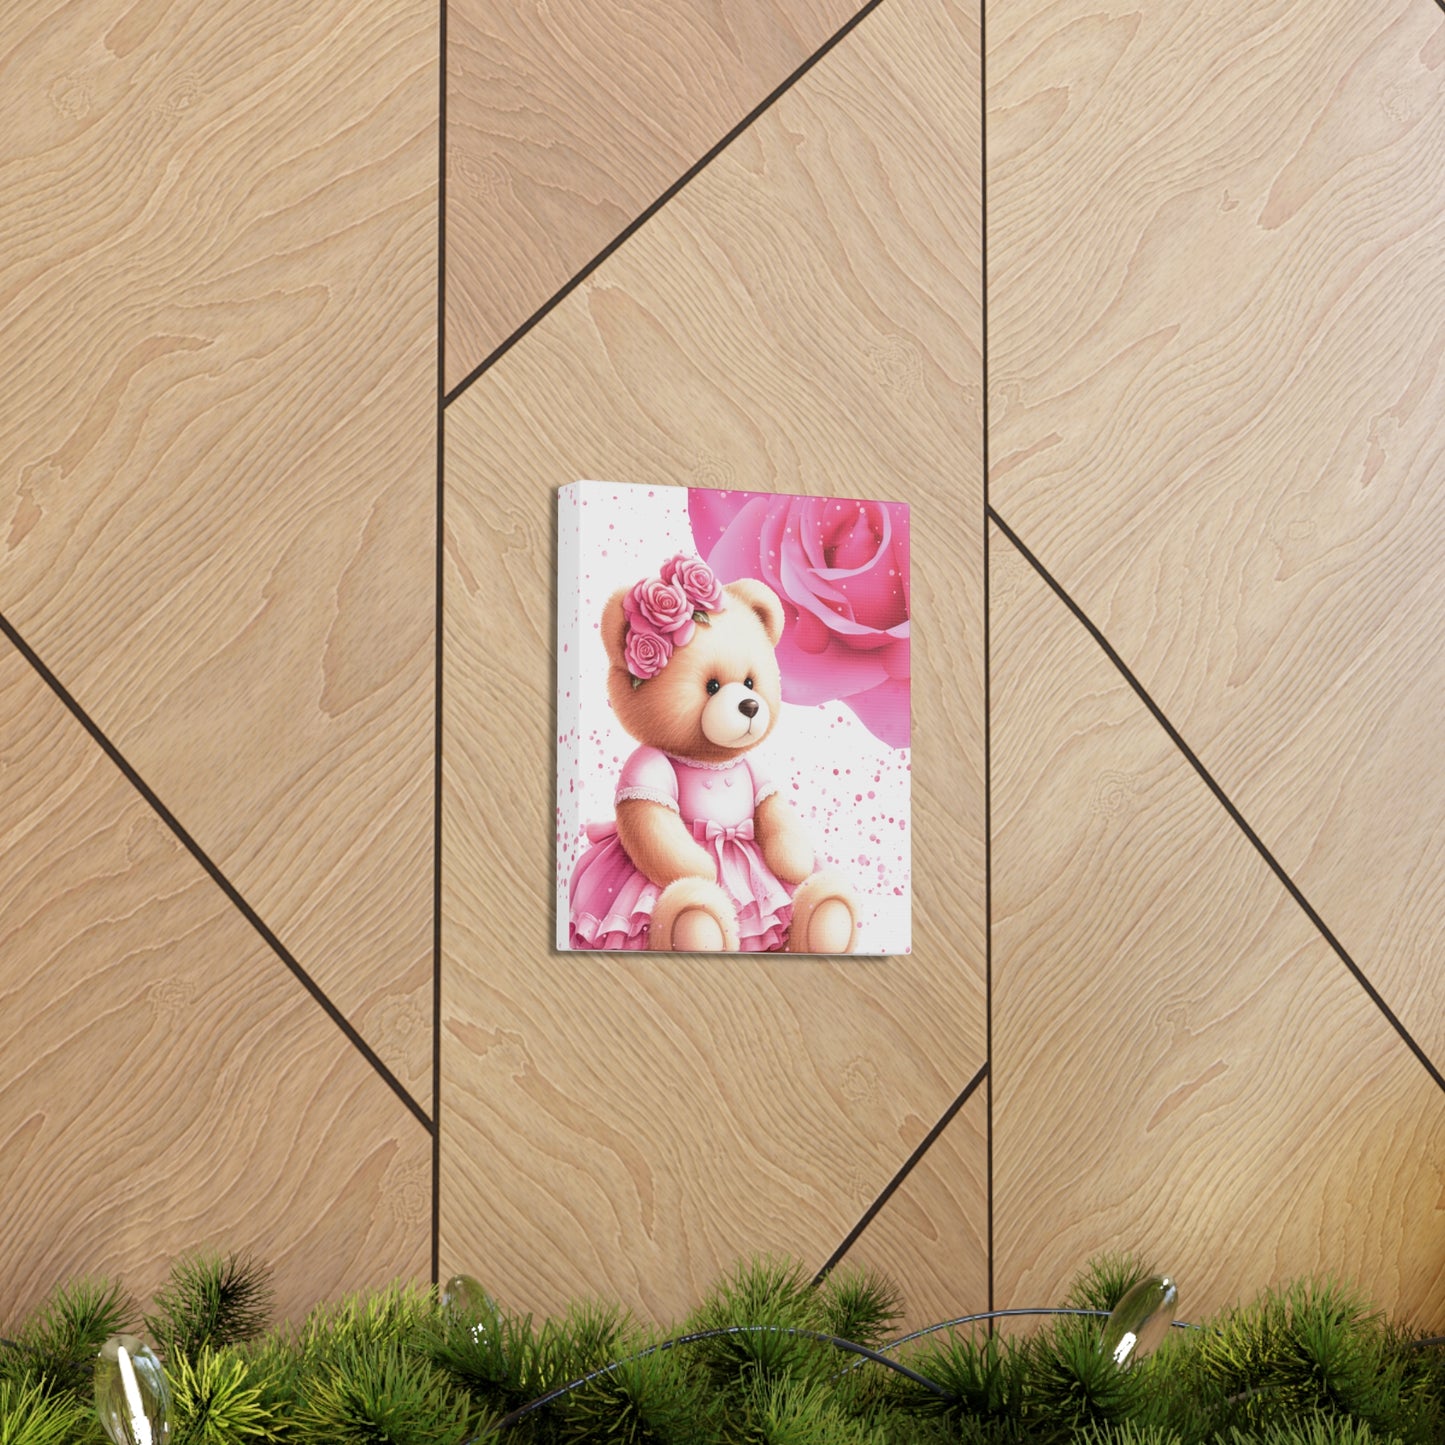 Rosie Pink Teddy Bear, Balloon Canvas Gallery Wraps, Wall Decor, Home Decor, Office Decor, Room Decor